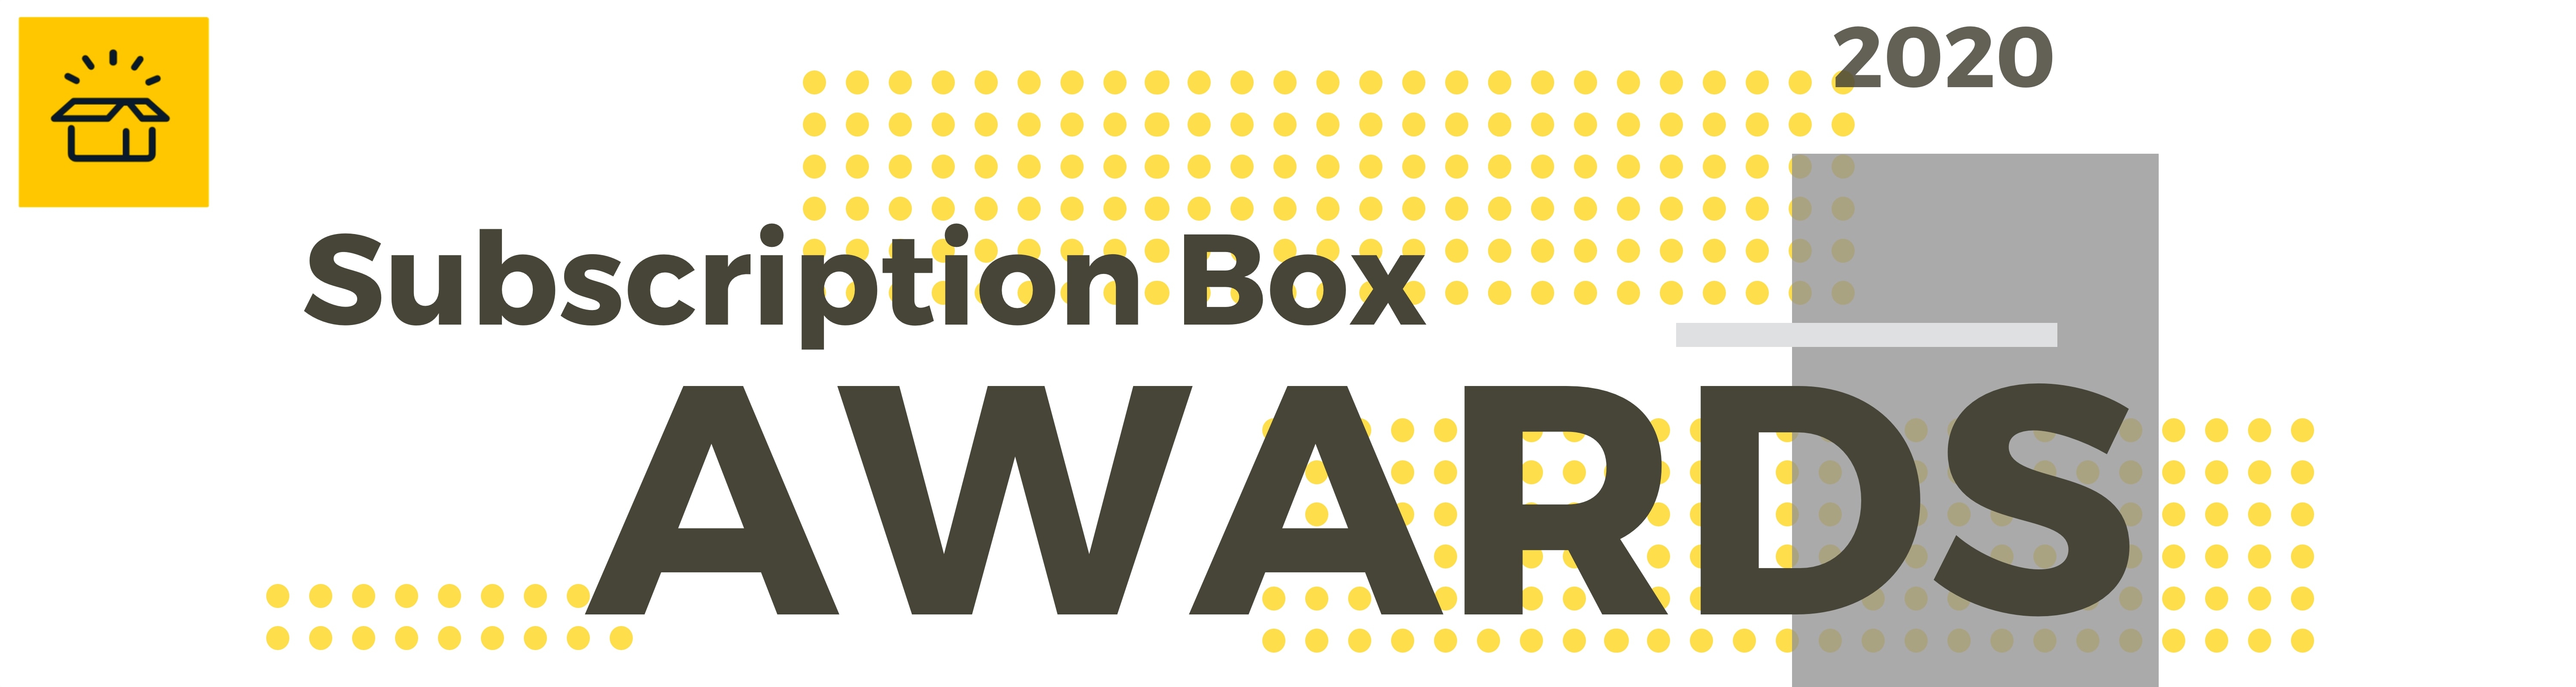 15-subscription-box-awards-banner-1.jpg